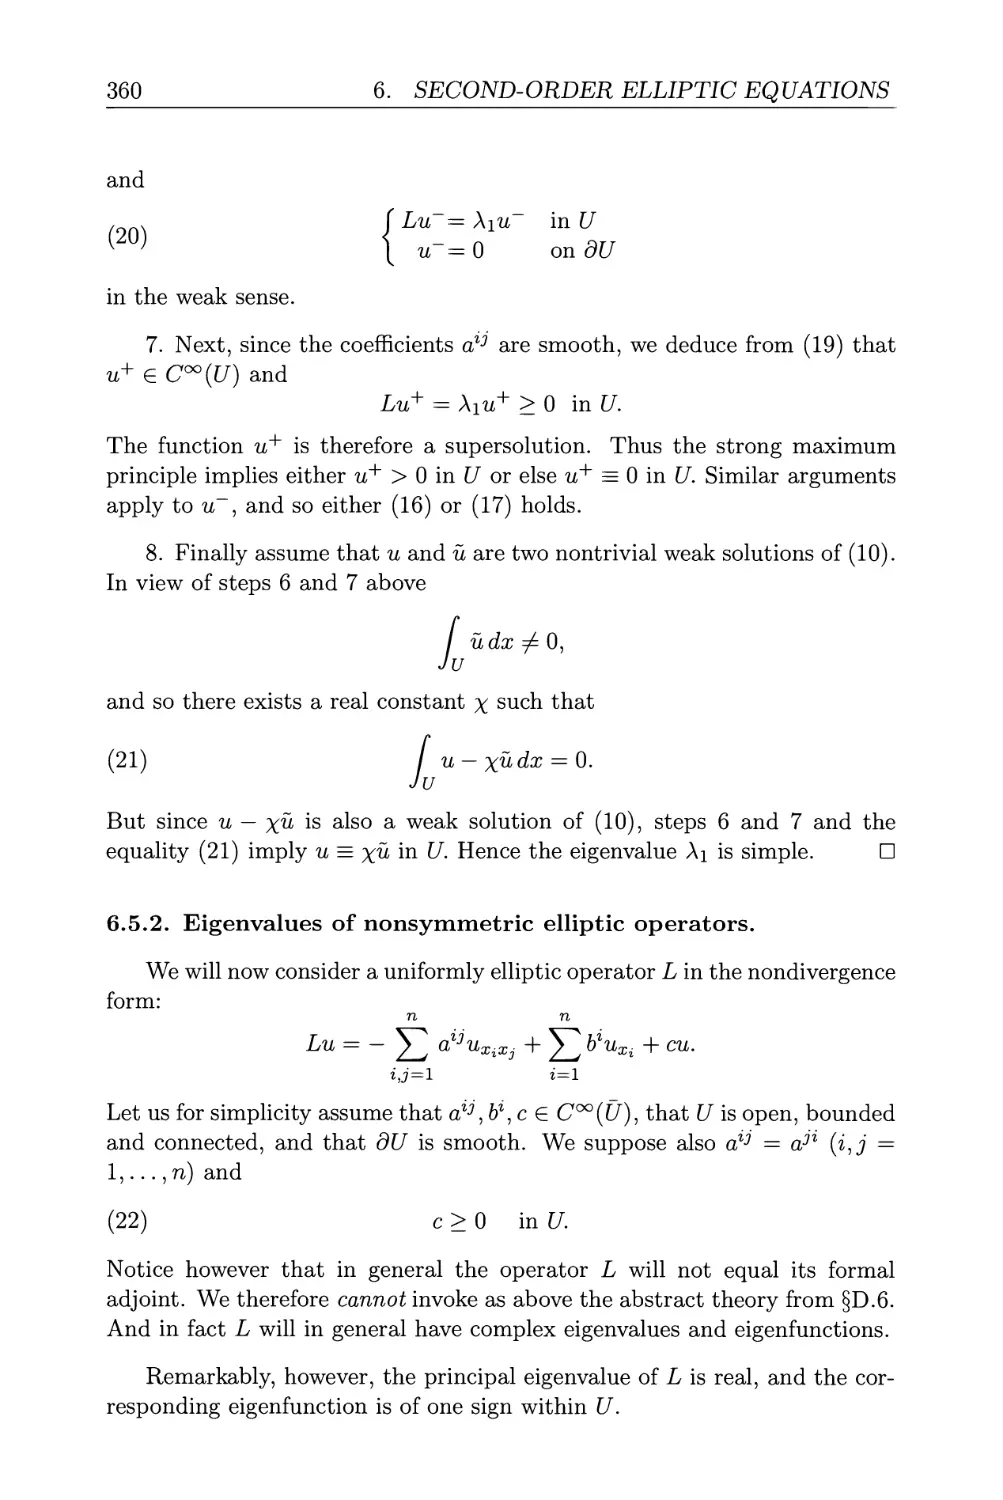 6.5.2. Eigenvalues of nonsymmetric elliptic operators